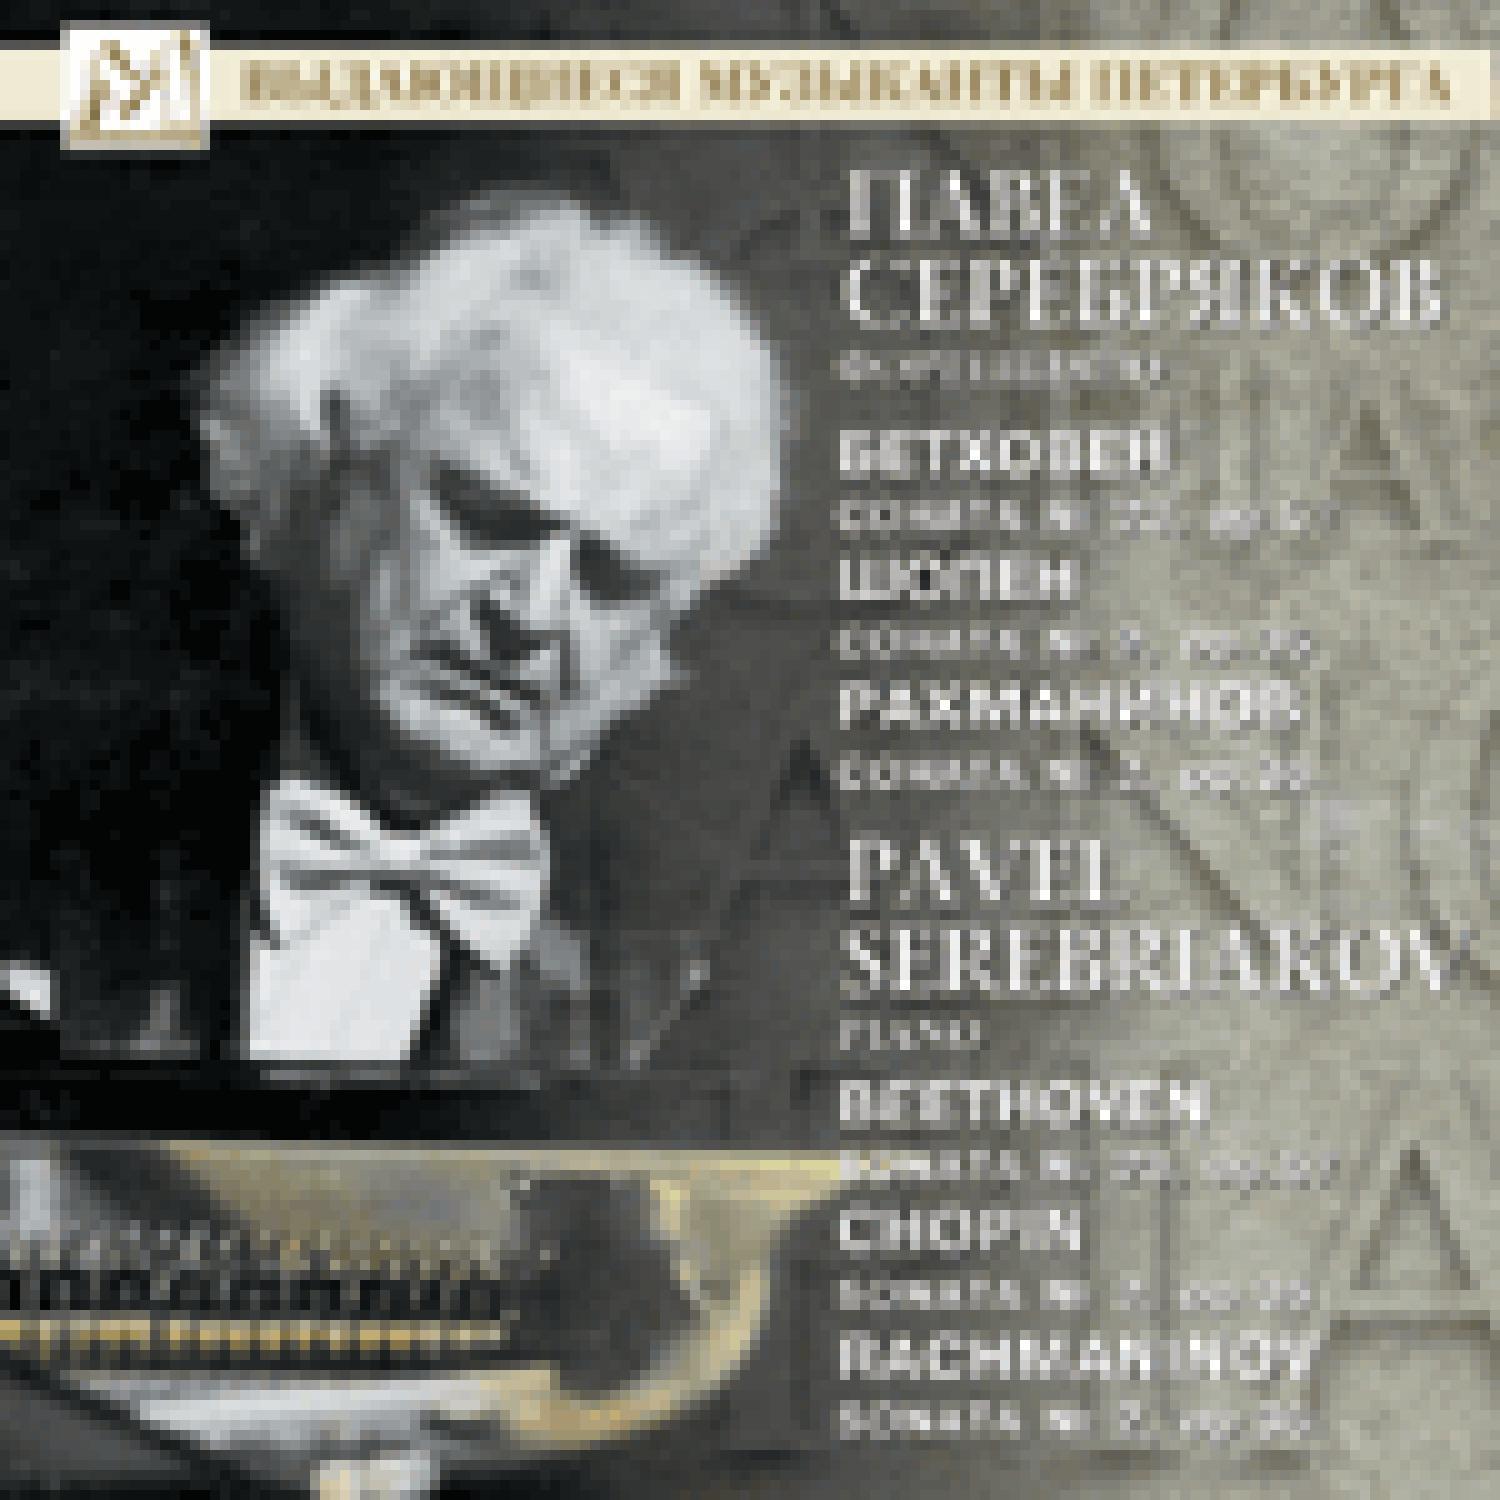 Beethoven, Chopin & Rachmaninoff